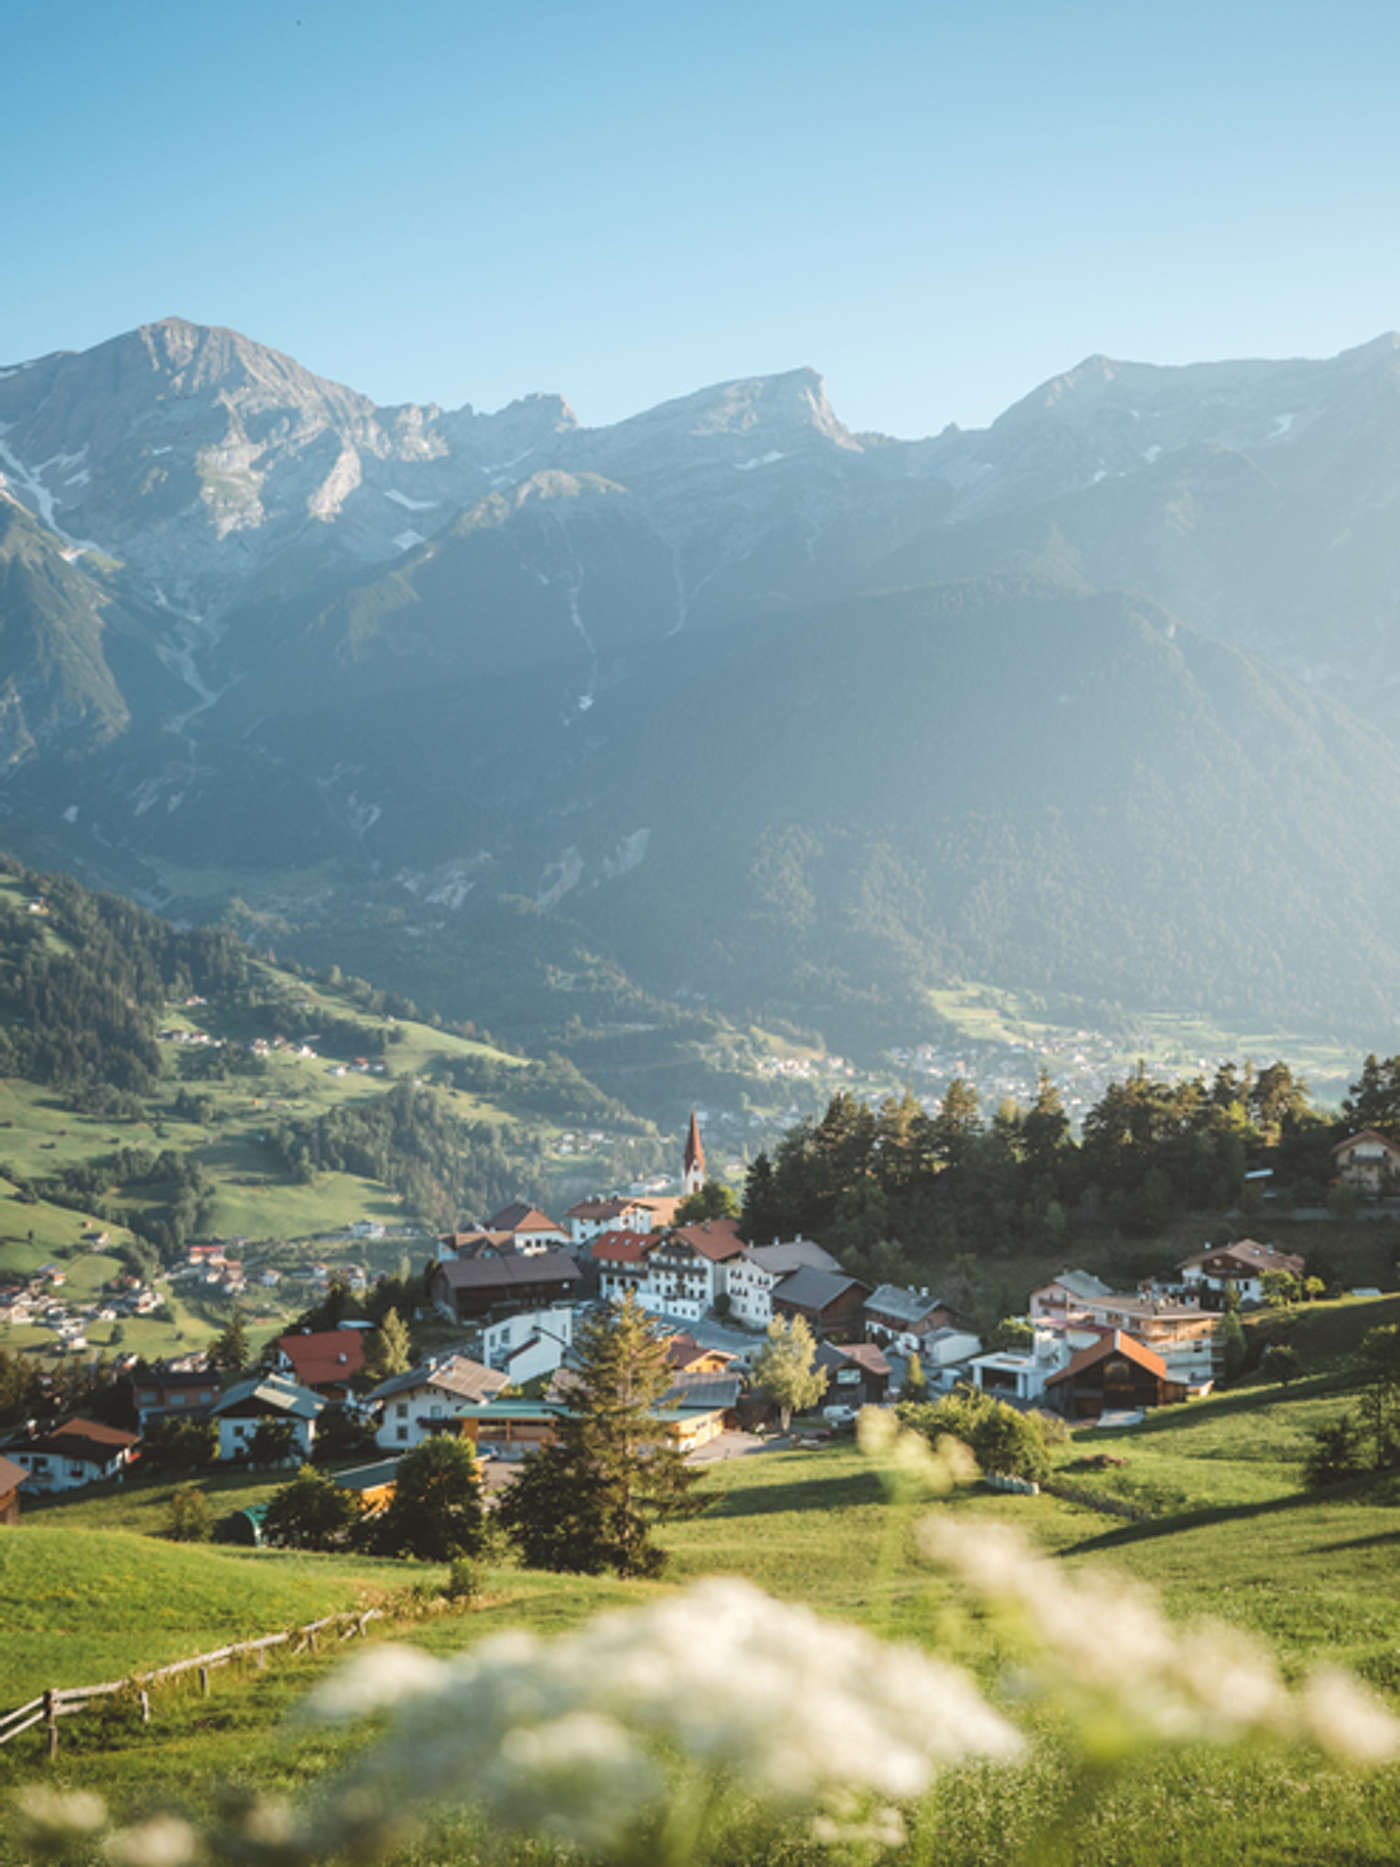 Objevit
Tvůj kousek
Tyrolsko.